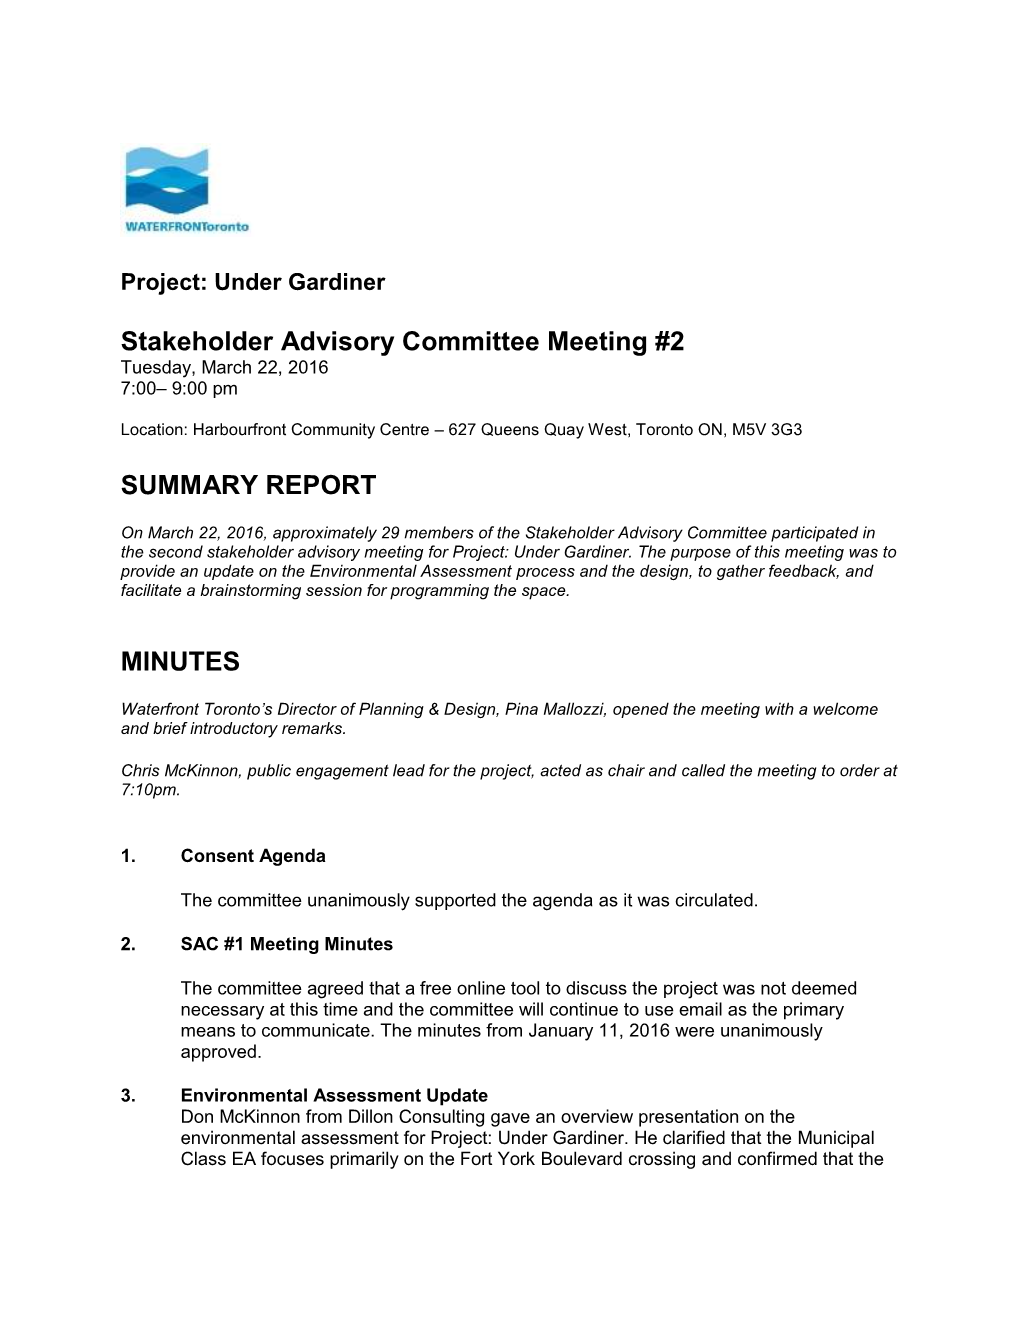 Stakeholder Advisory Committee Meeting #2 SUMMARY REPORT